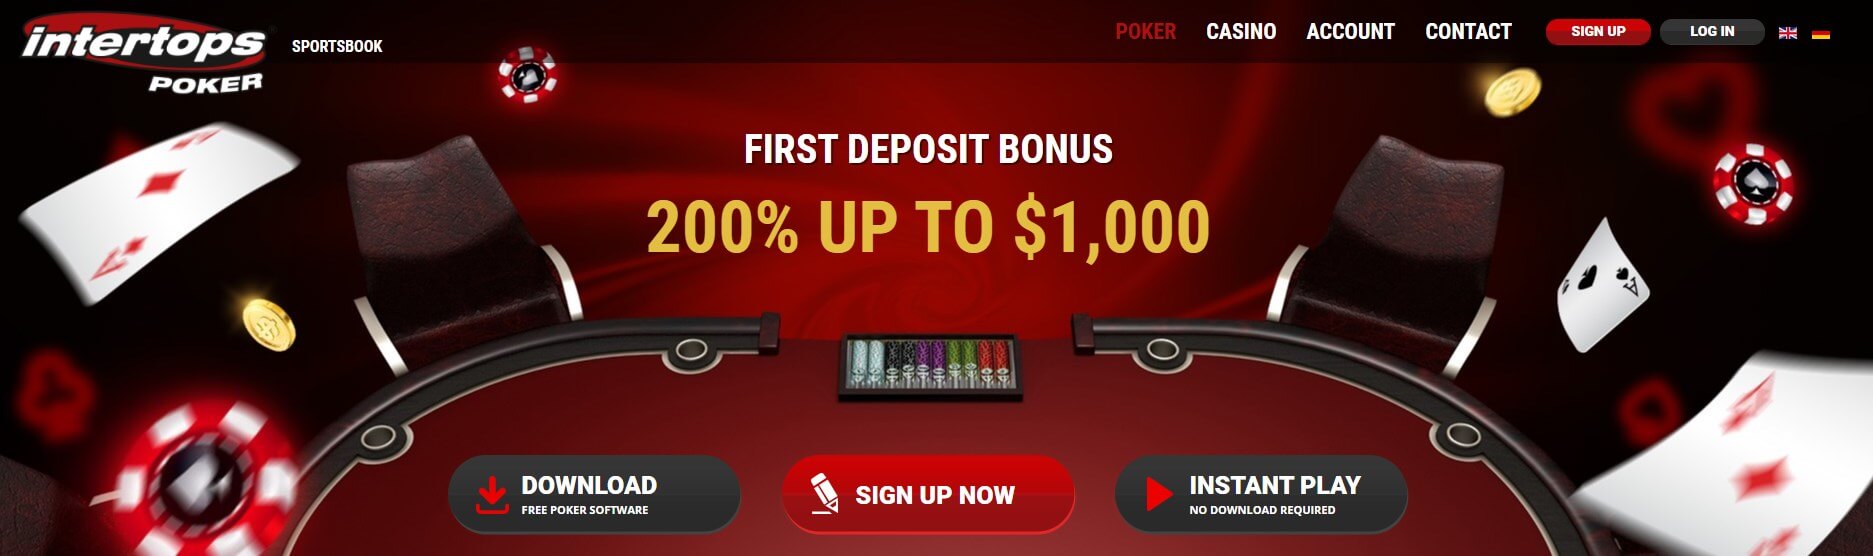 intertops poker welcome bonus